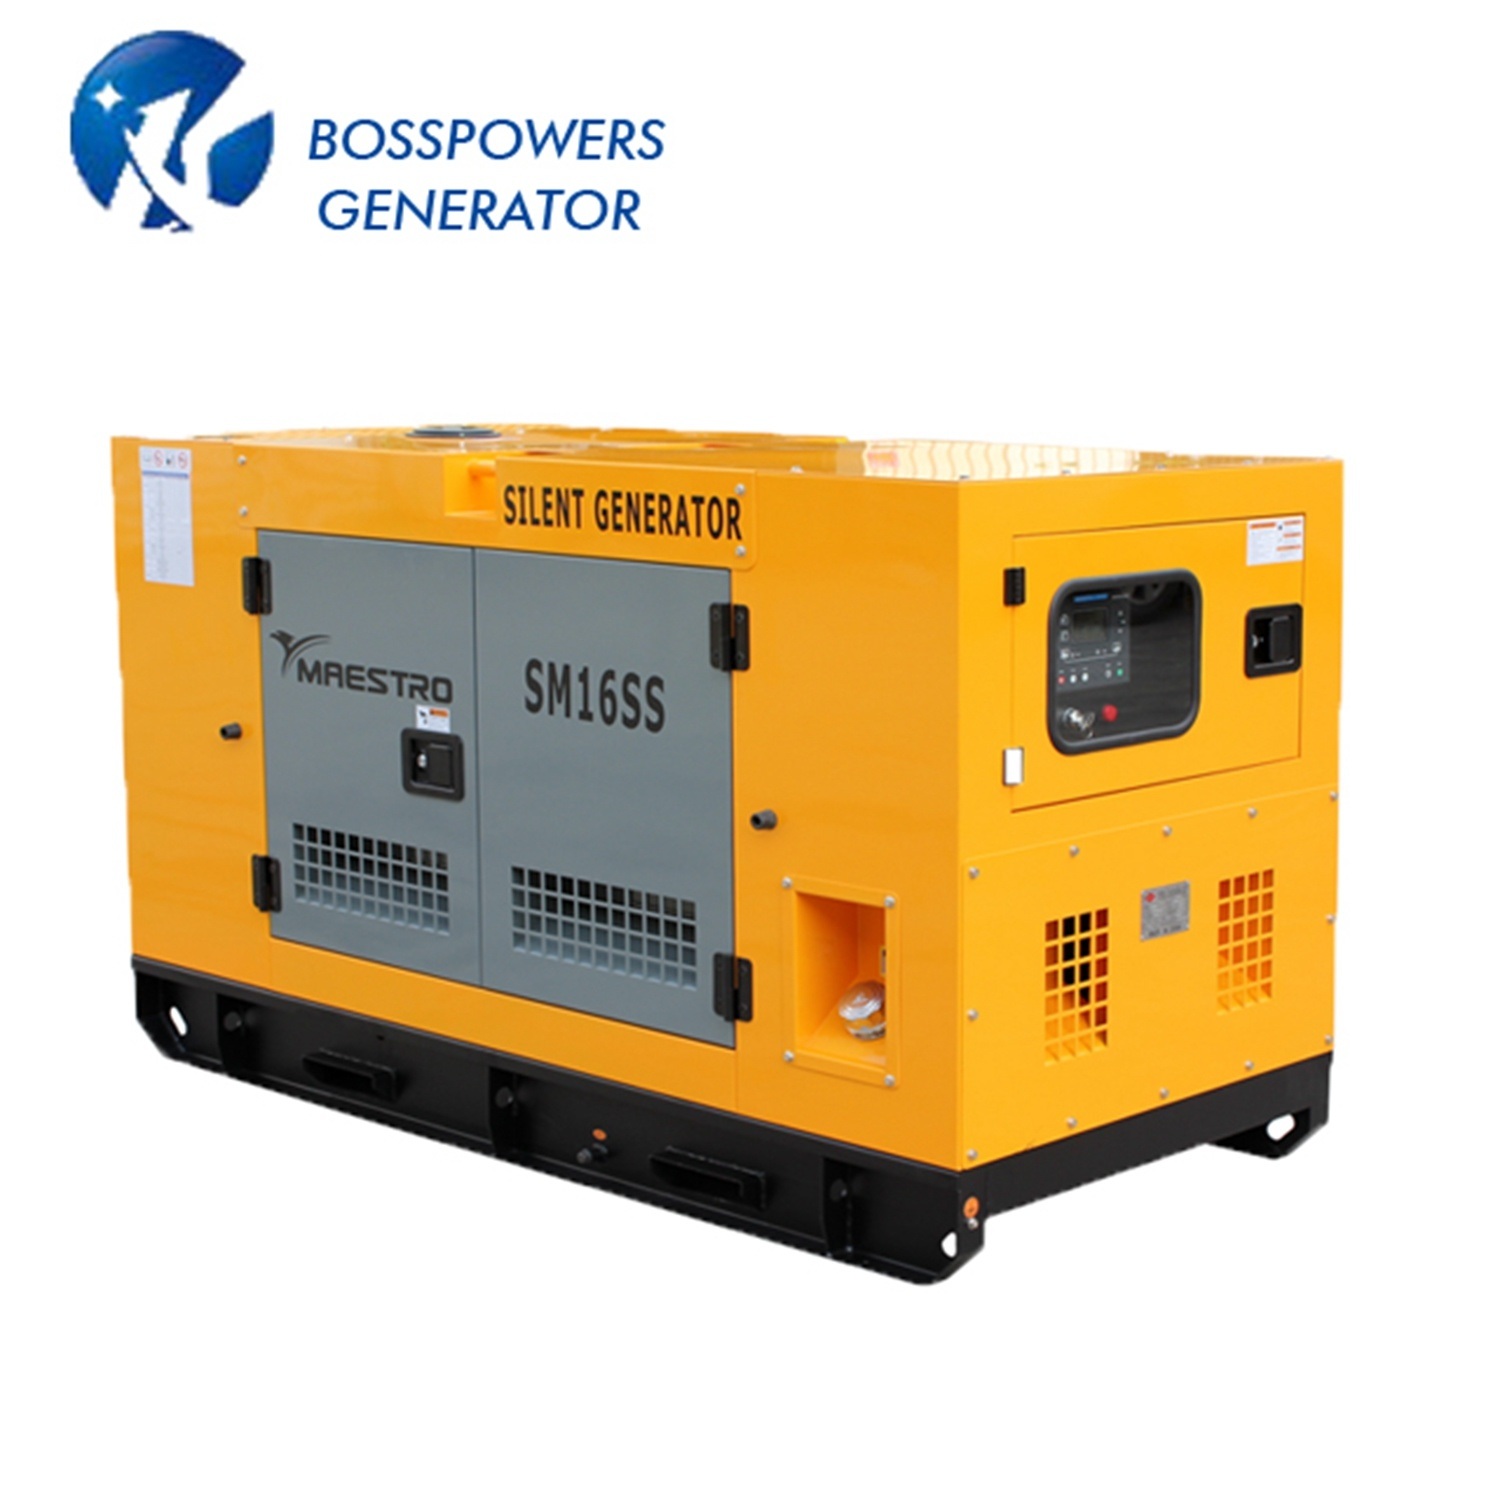 Standby Power Electric Genset Diesel Lovol Engine Silent Generator 100kVA